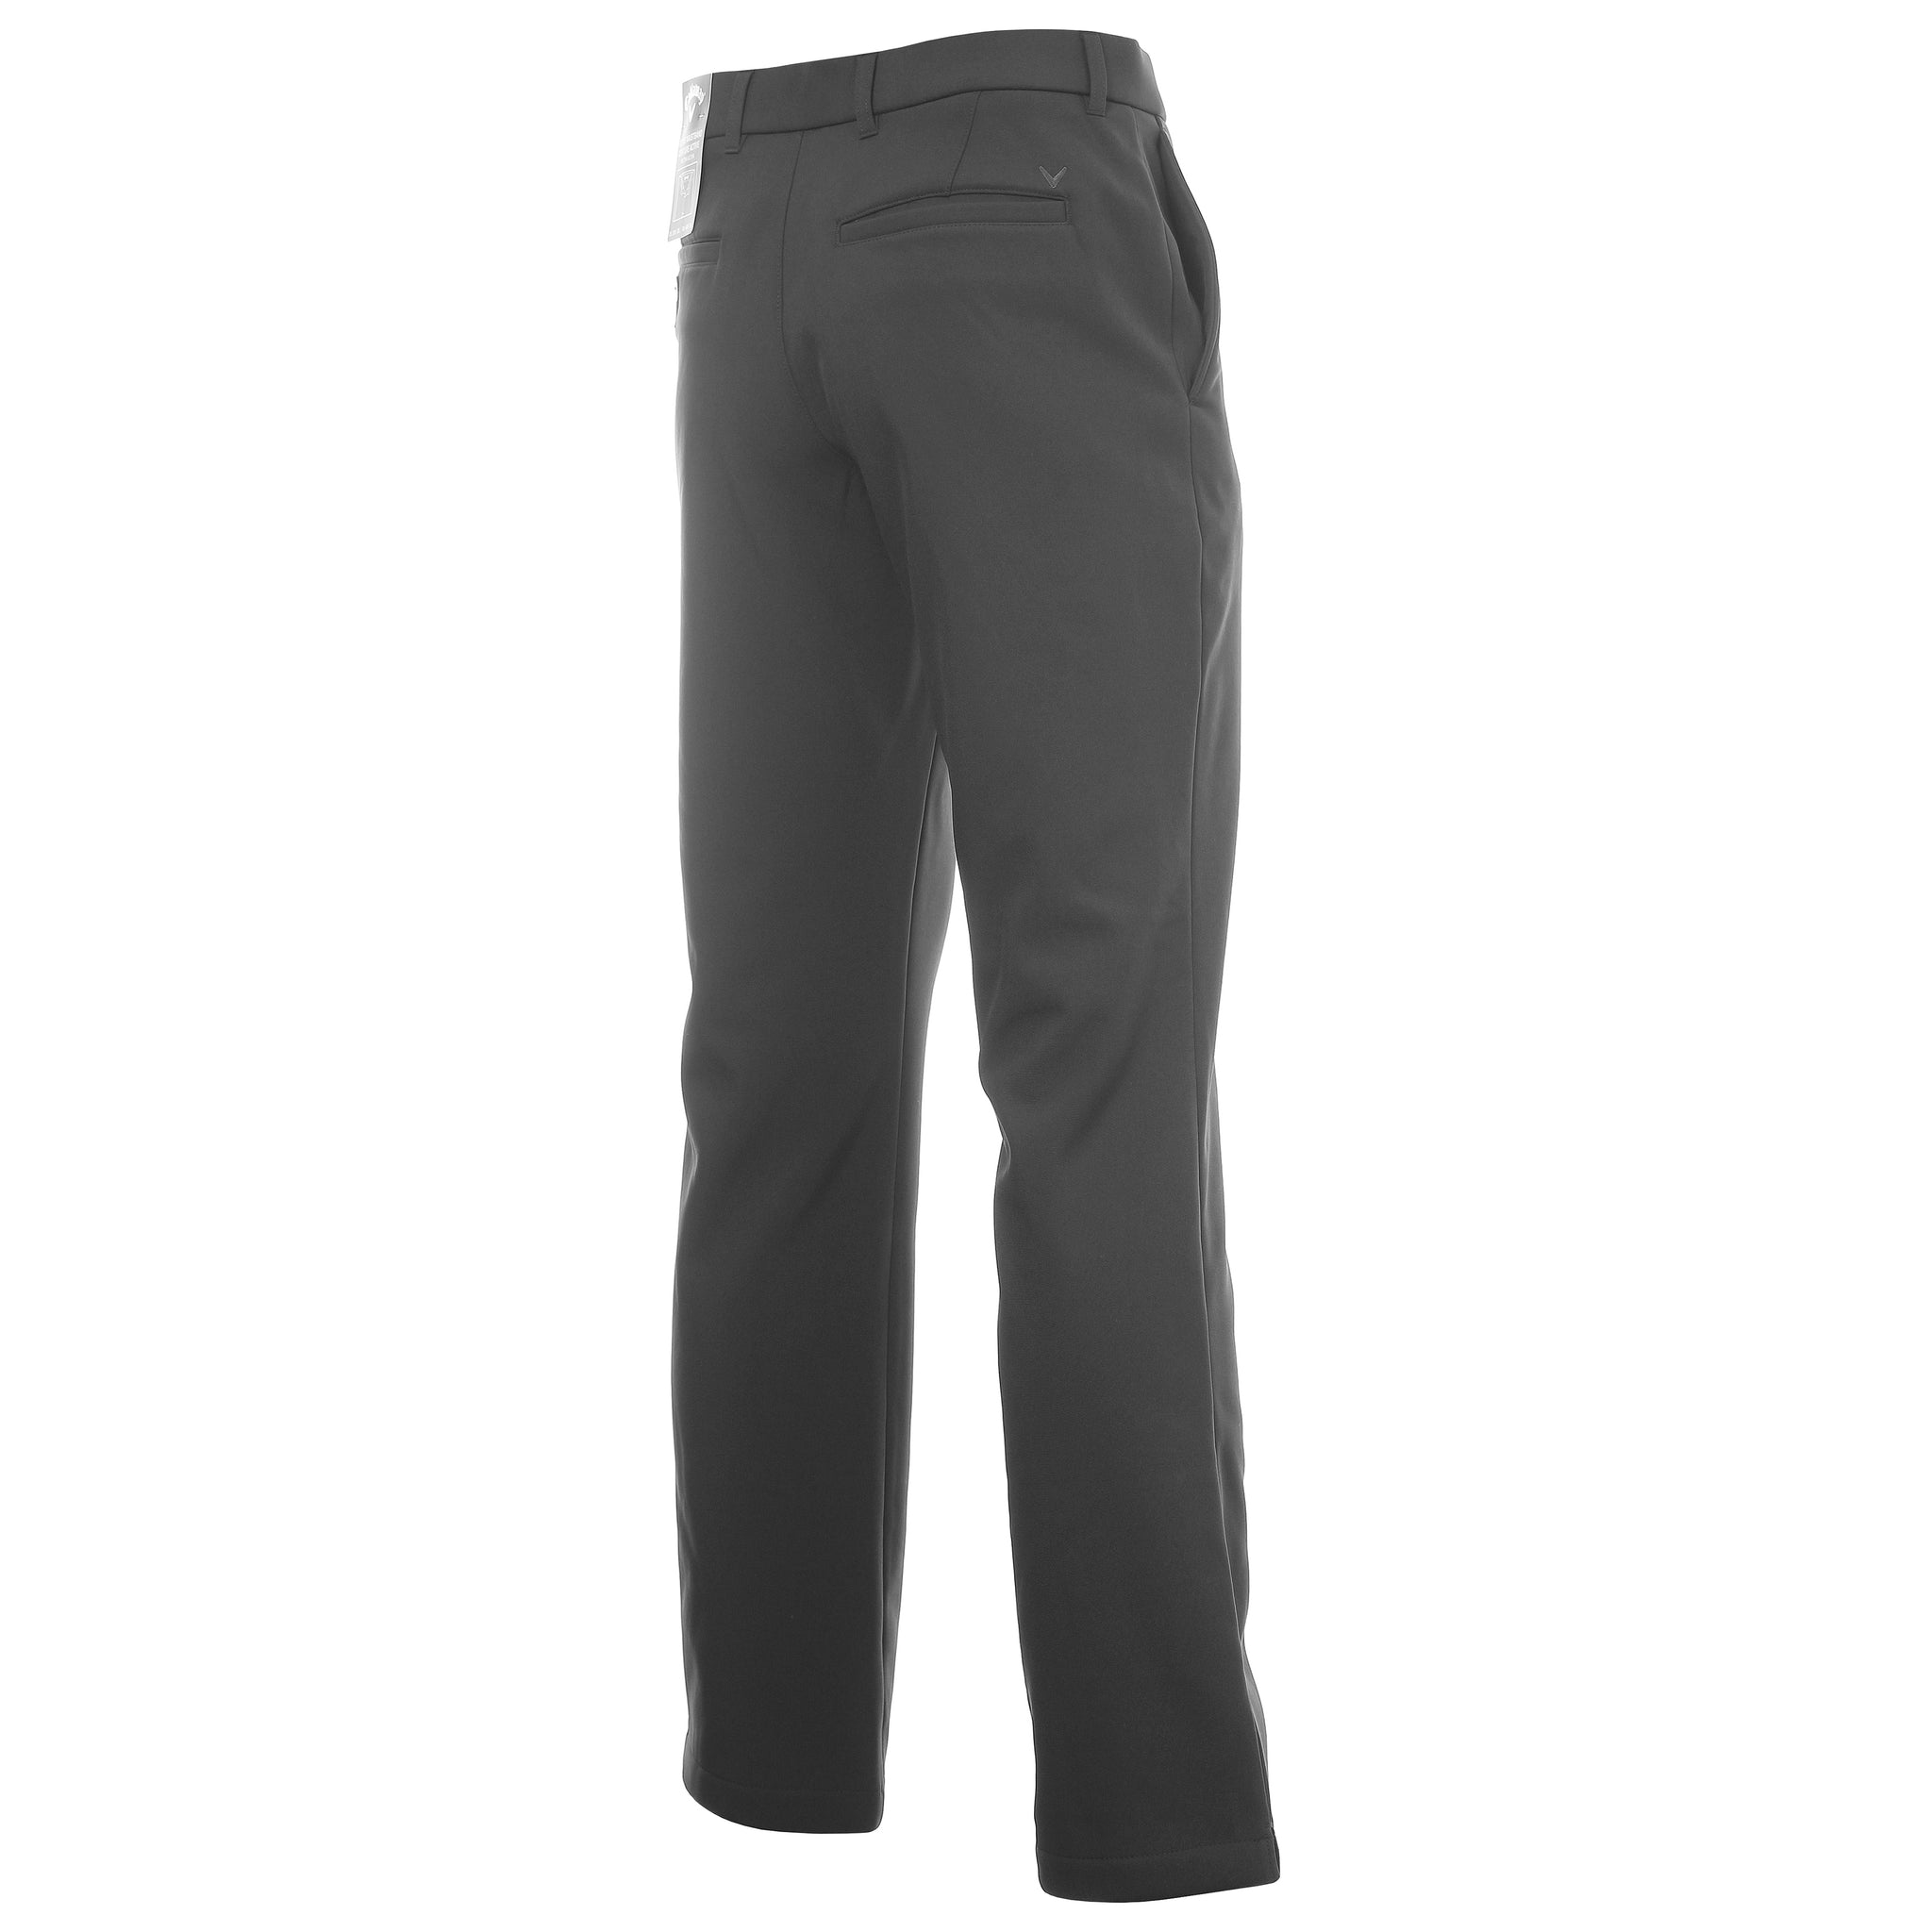 Mil-Tec Ma1 Warm Thermal Combat Work Mens Trousers Winter Insulation Pants  Black | eBay